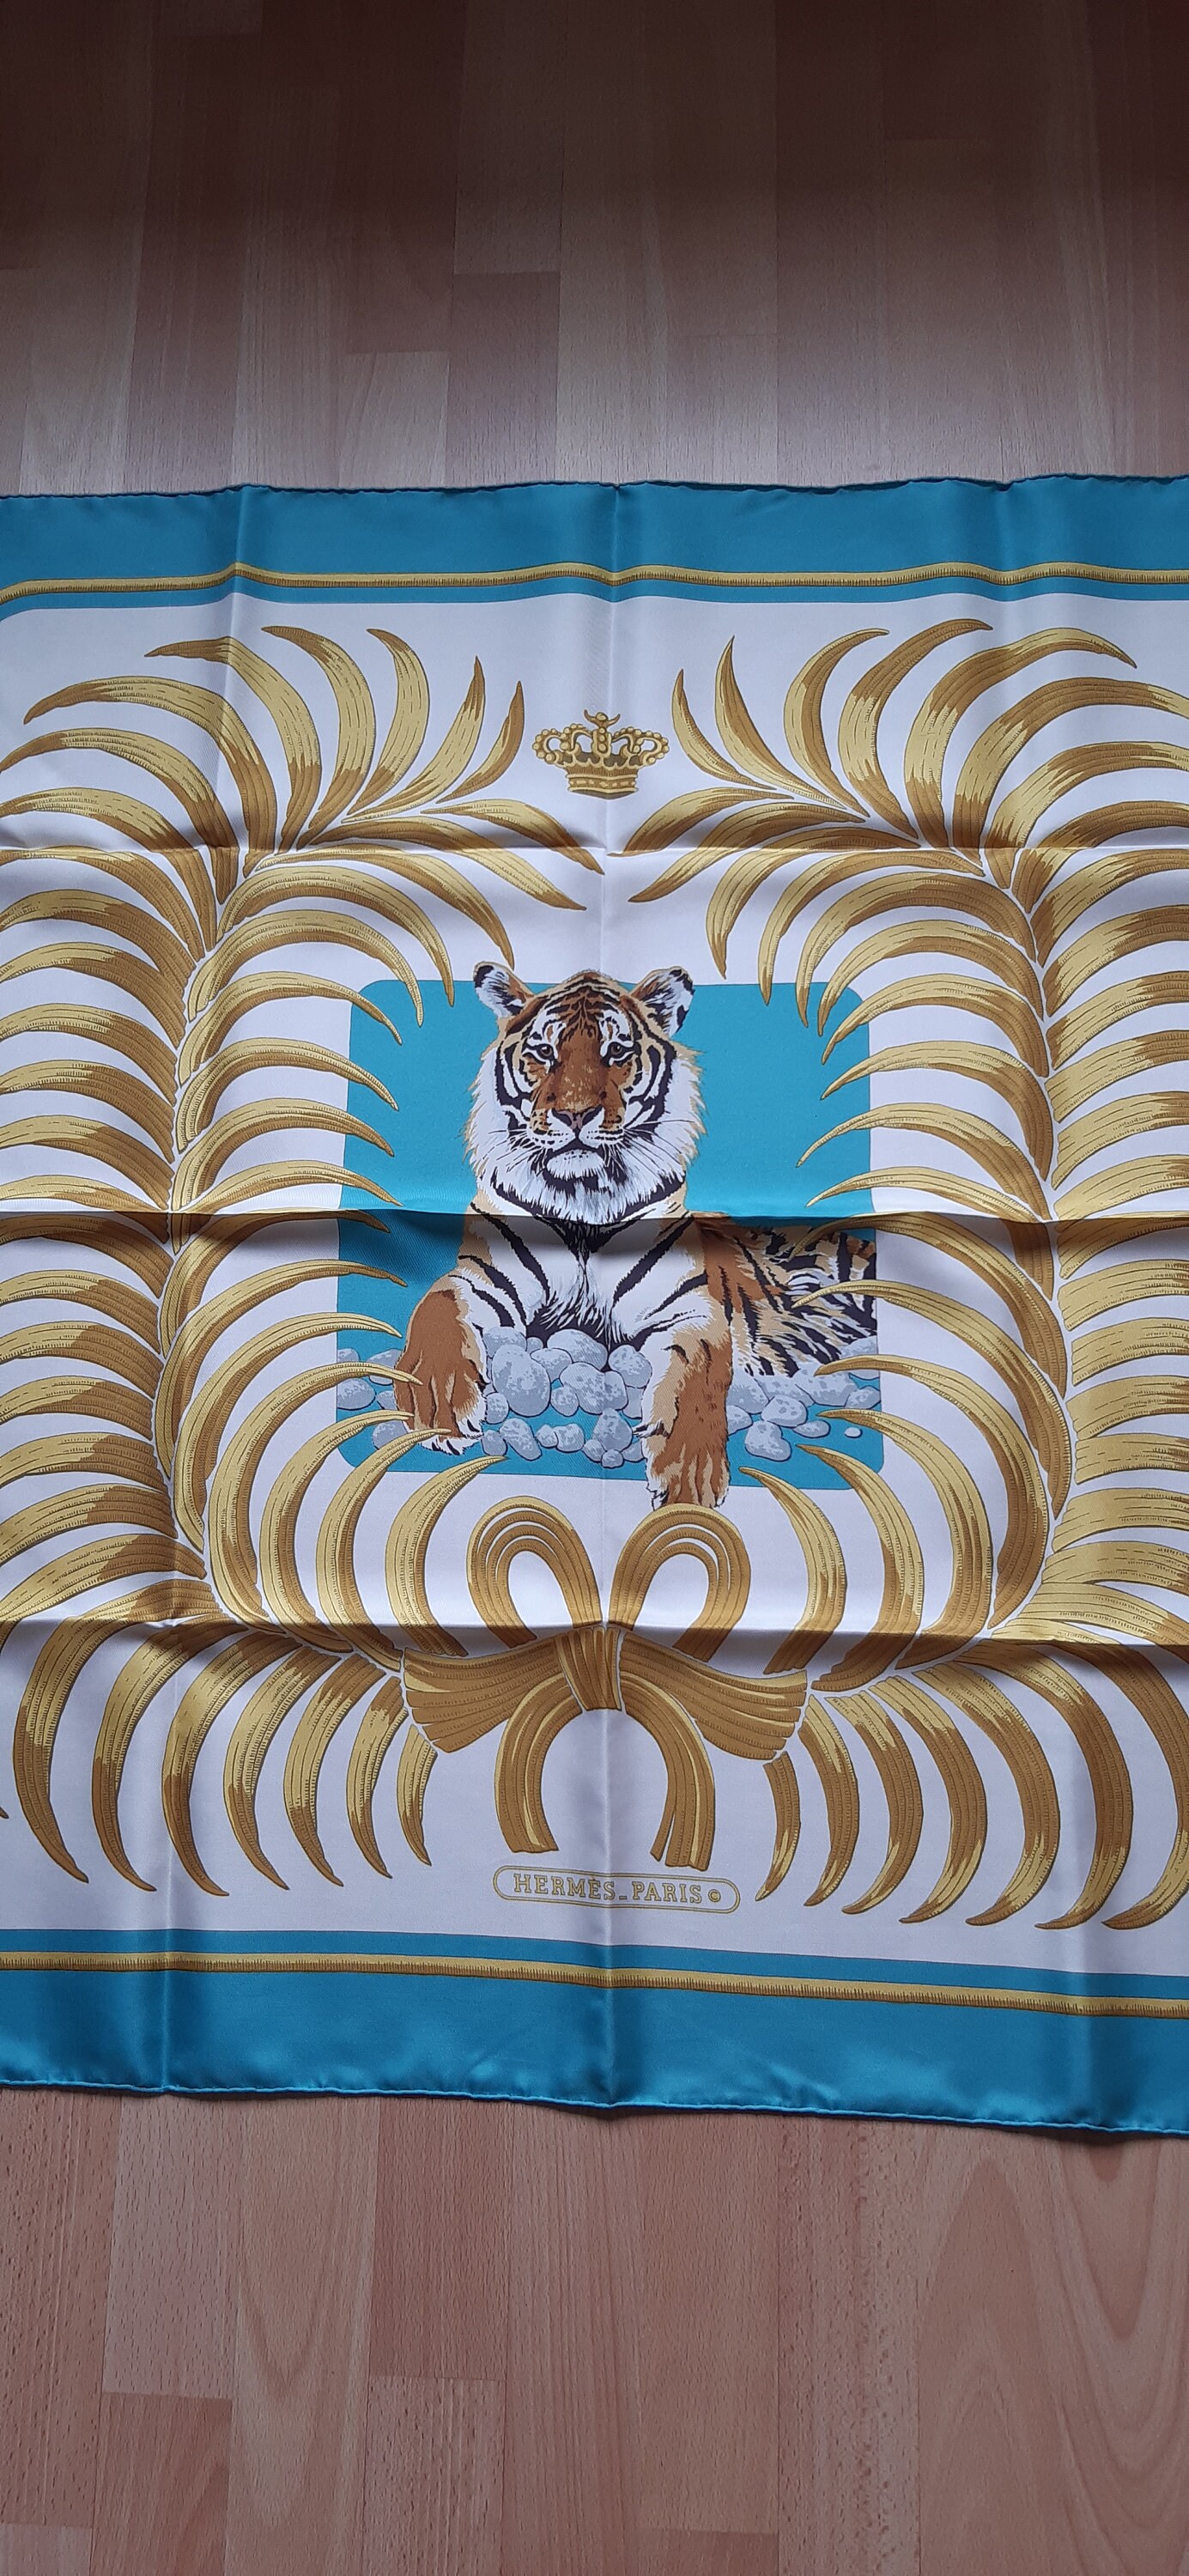 Hermès Tiger Royale Majestic Tiger Vintage Mint Cond 